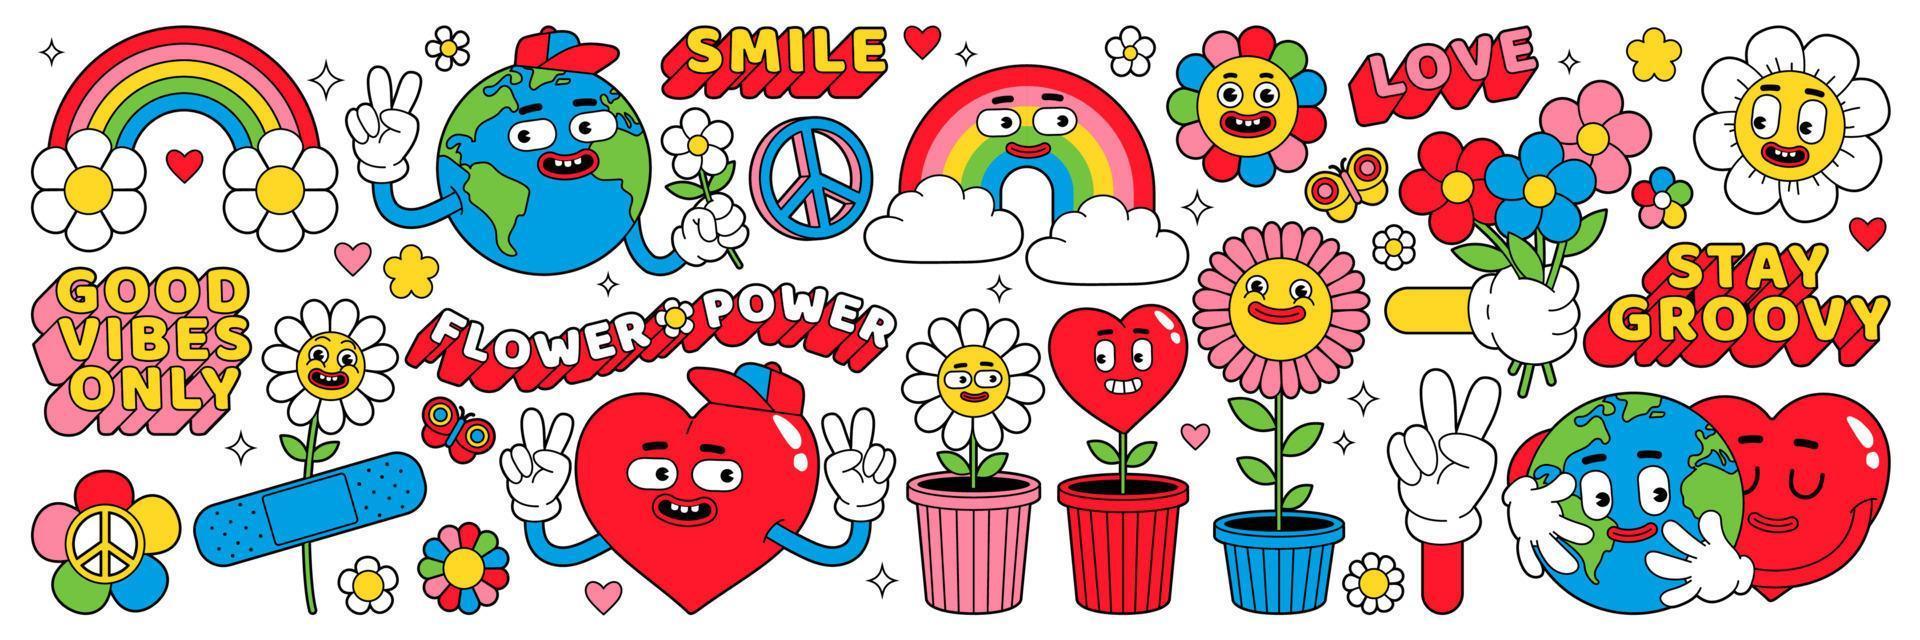 Groovy sticker pack in trendy retro cartoon style. Funny happy Earth, rainbow, heart, flower, daisy. vector